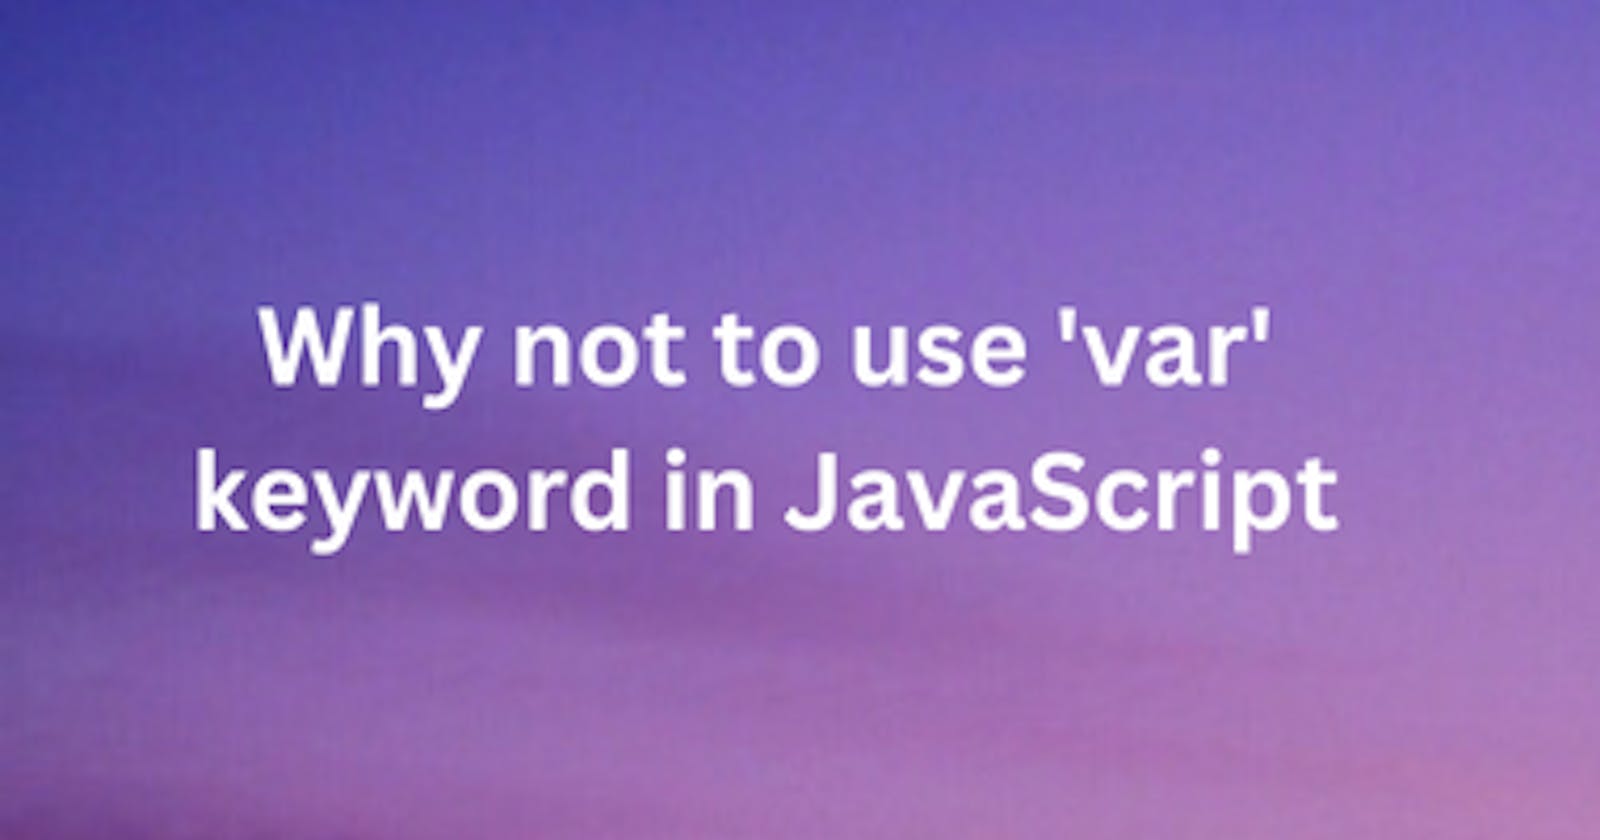 Why we should not use 'var' keyword in JavaScript